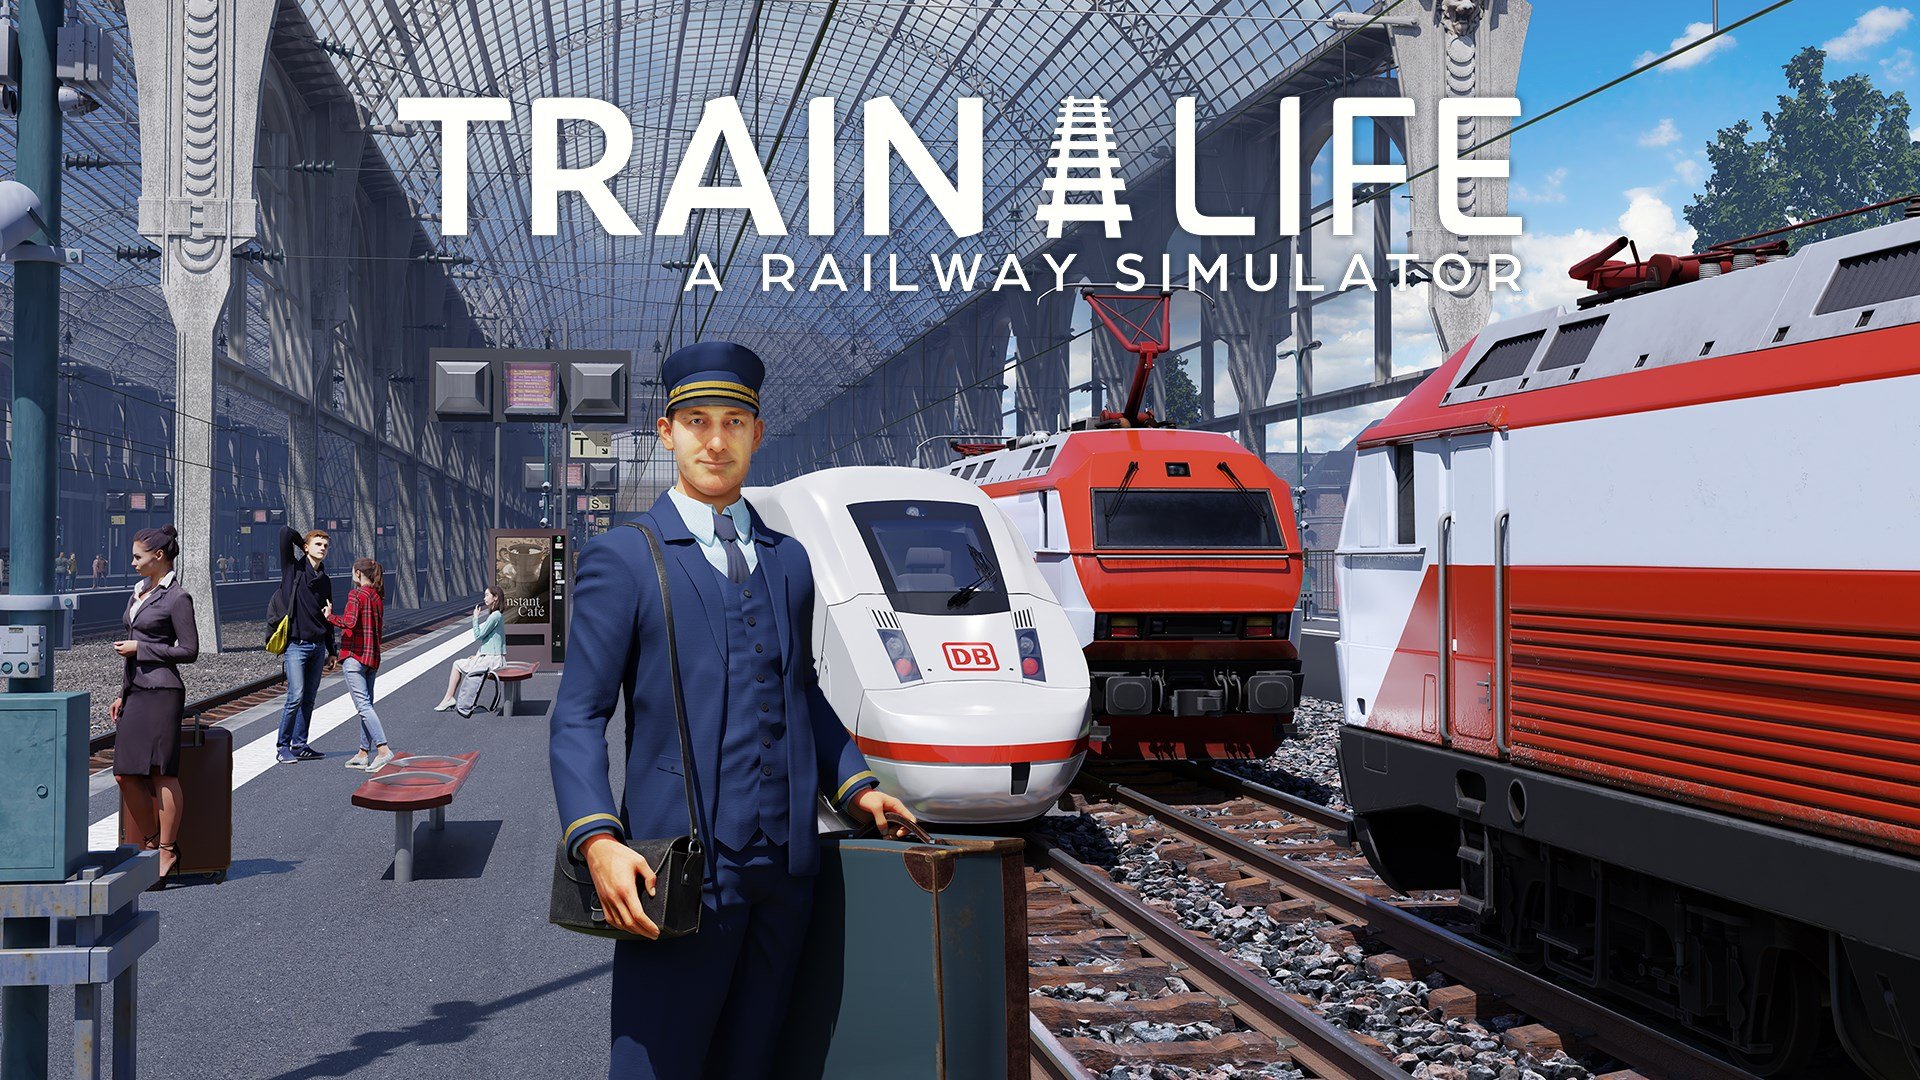 Train Life - A Railway Simulator - Xbox One cover image